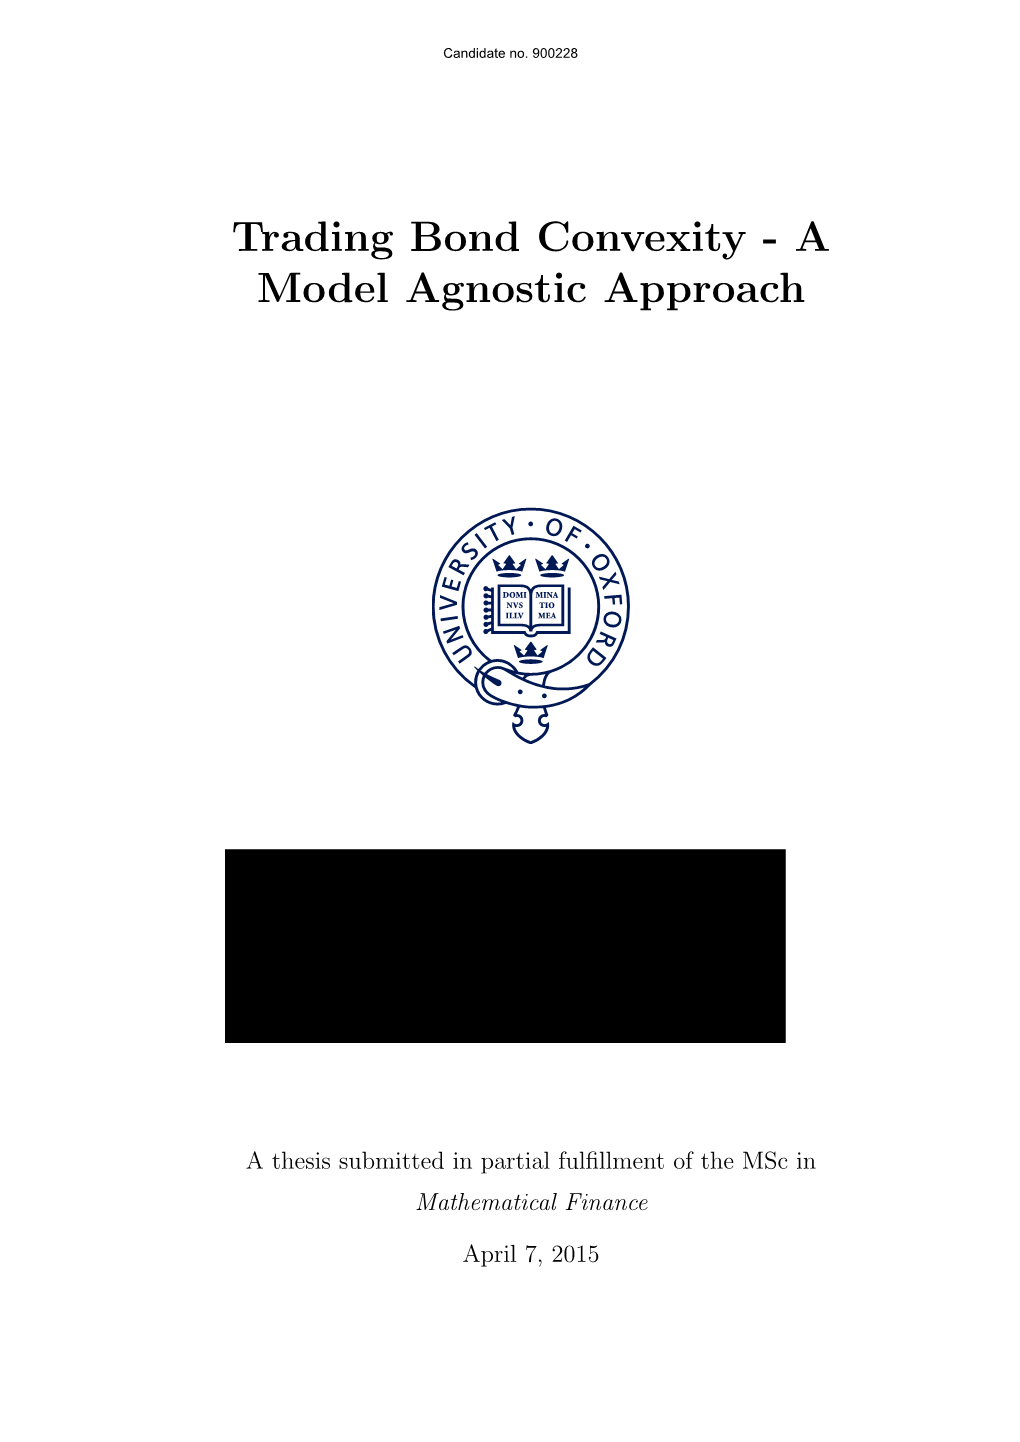 Trading Bond Convexity - a Model Agnostic Approach